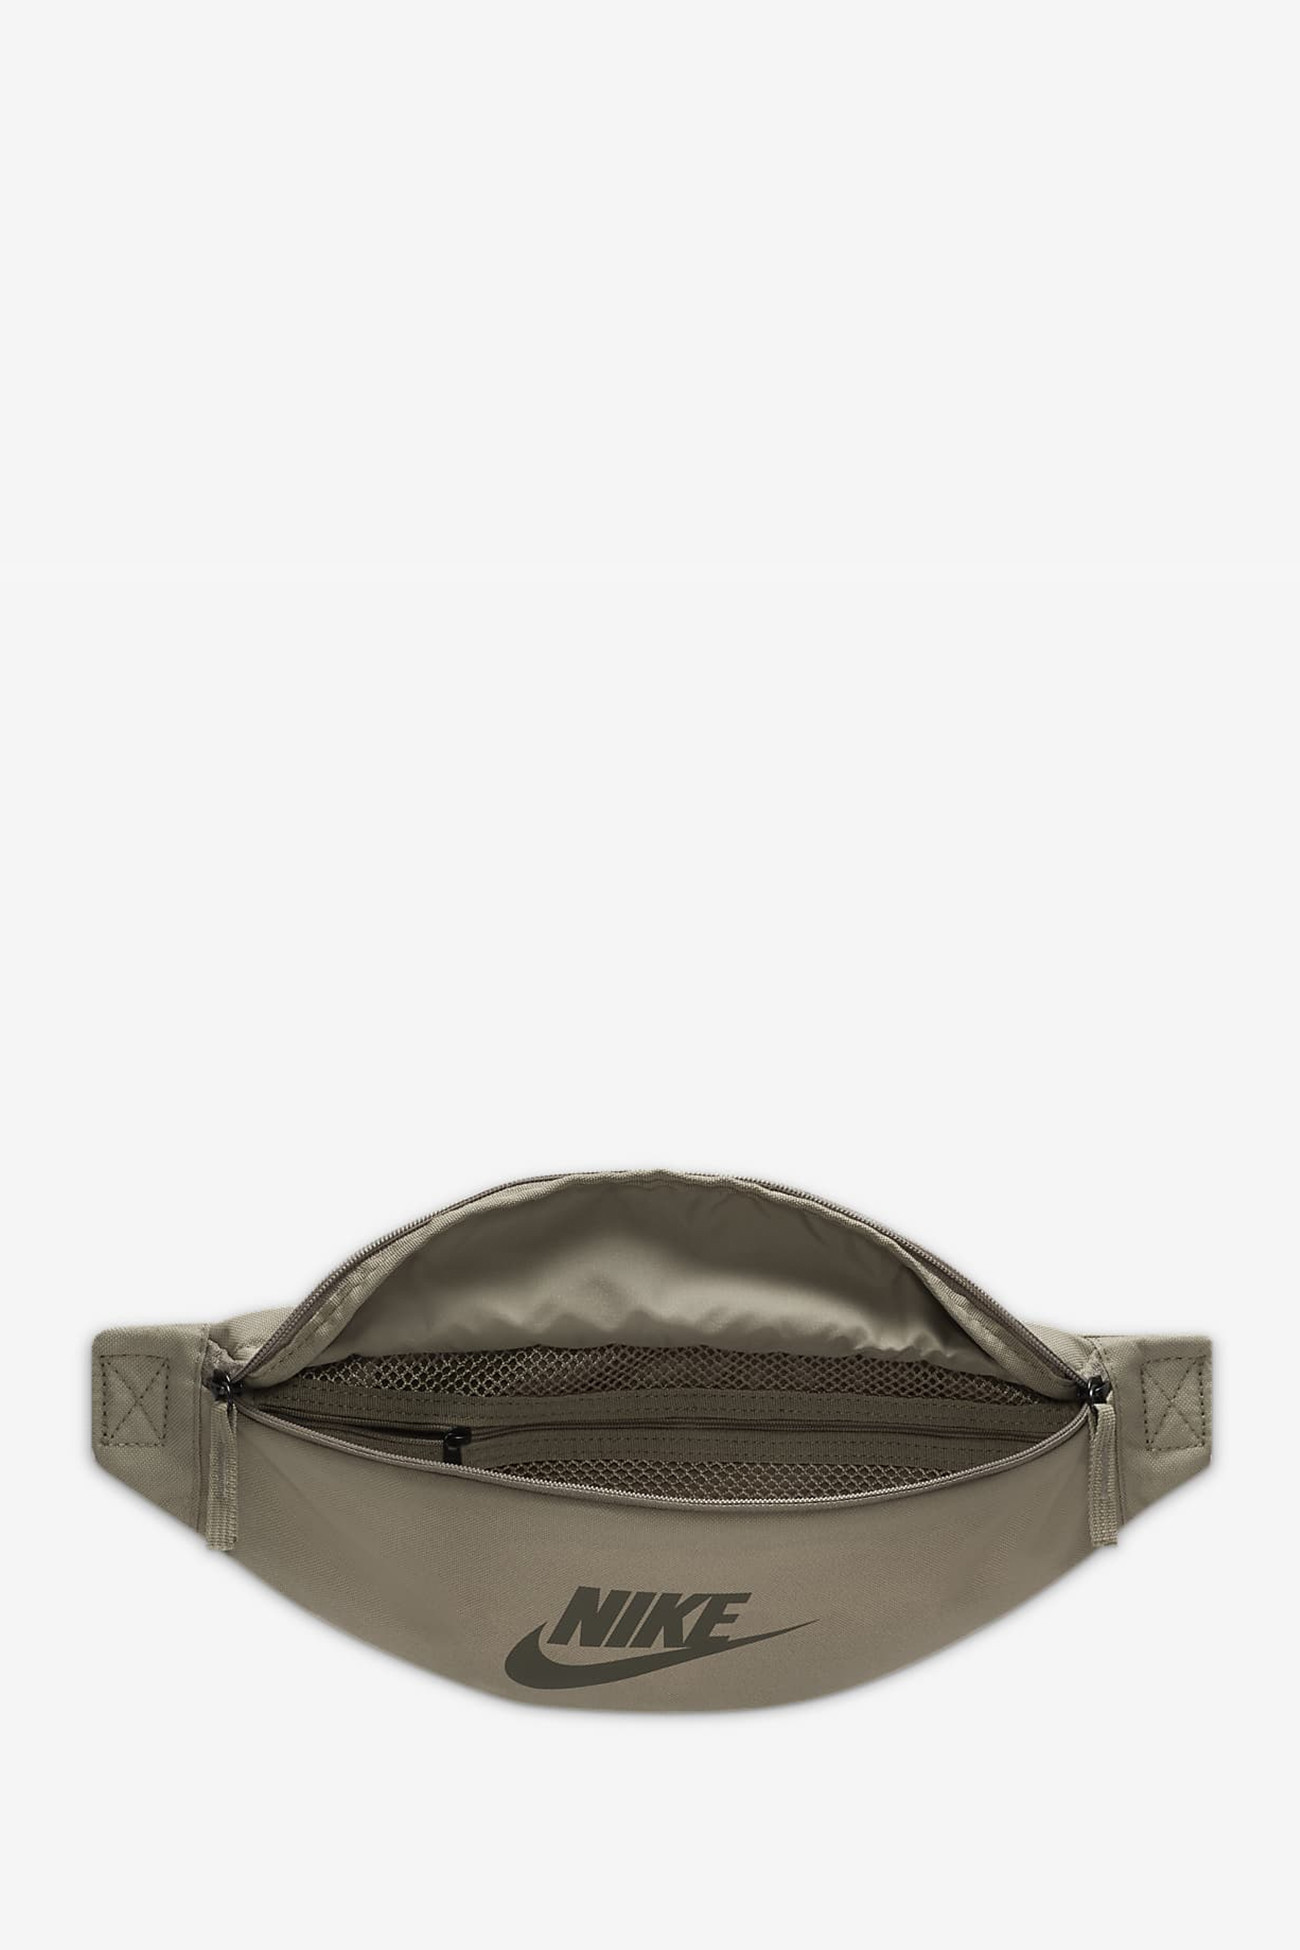 Сумка Nike Heritage хакі DB0490-351 